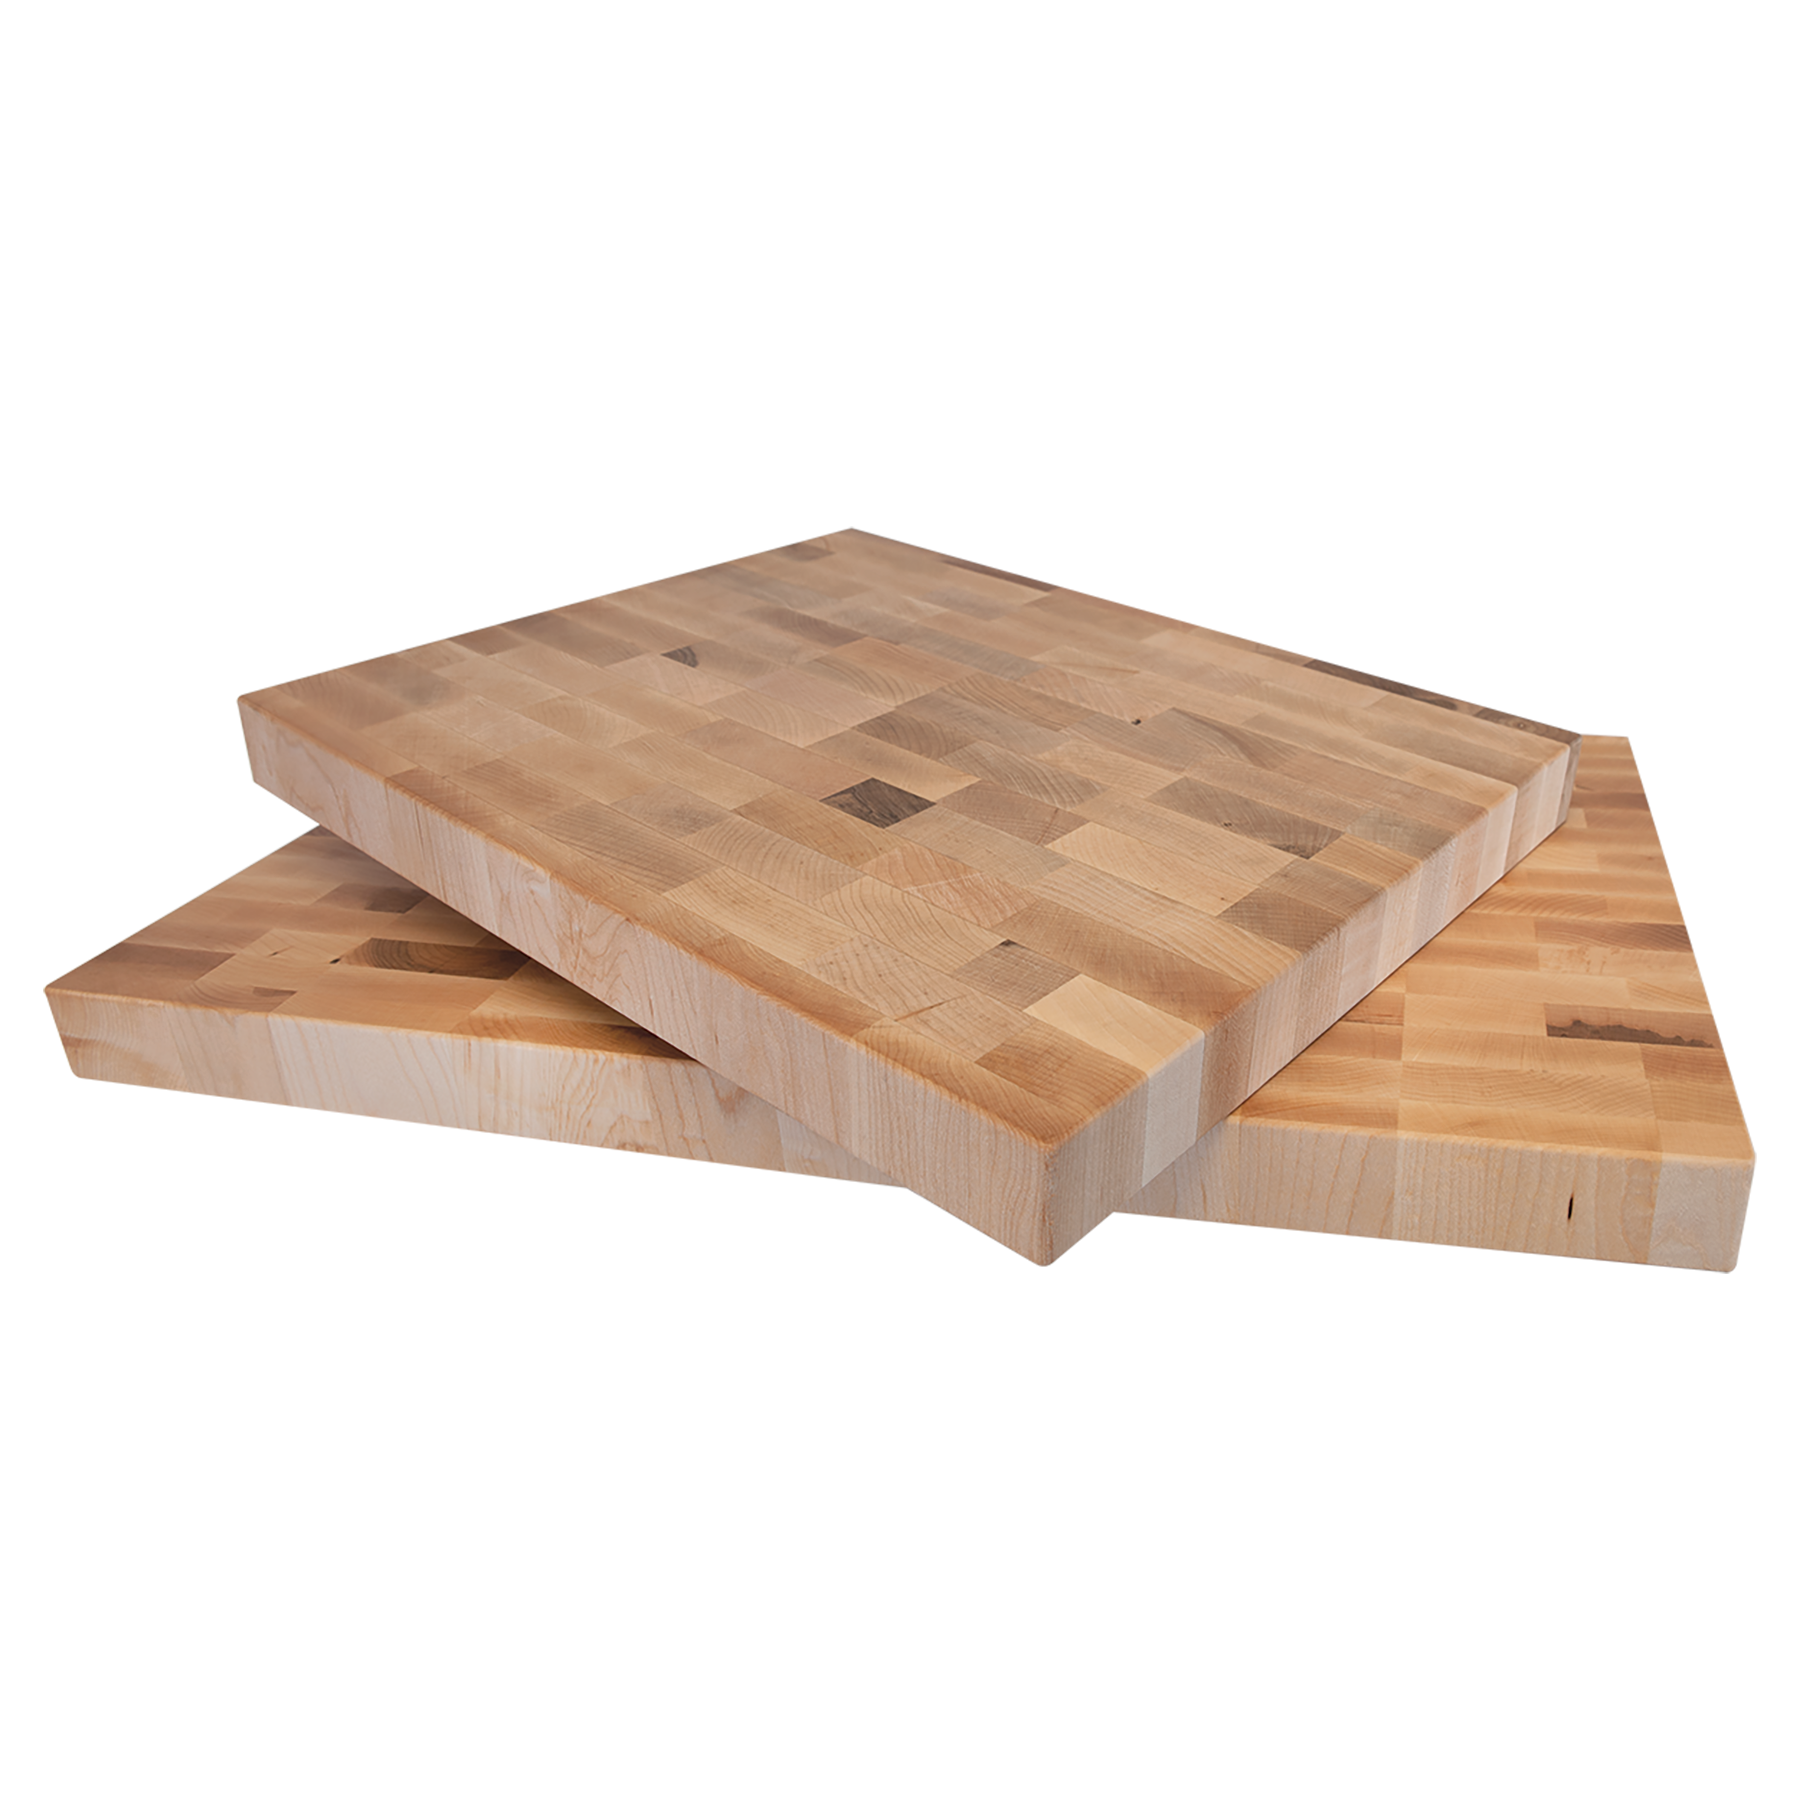 16" x 13" x 1 1/2" Maple Butcherblock Cutting Board